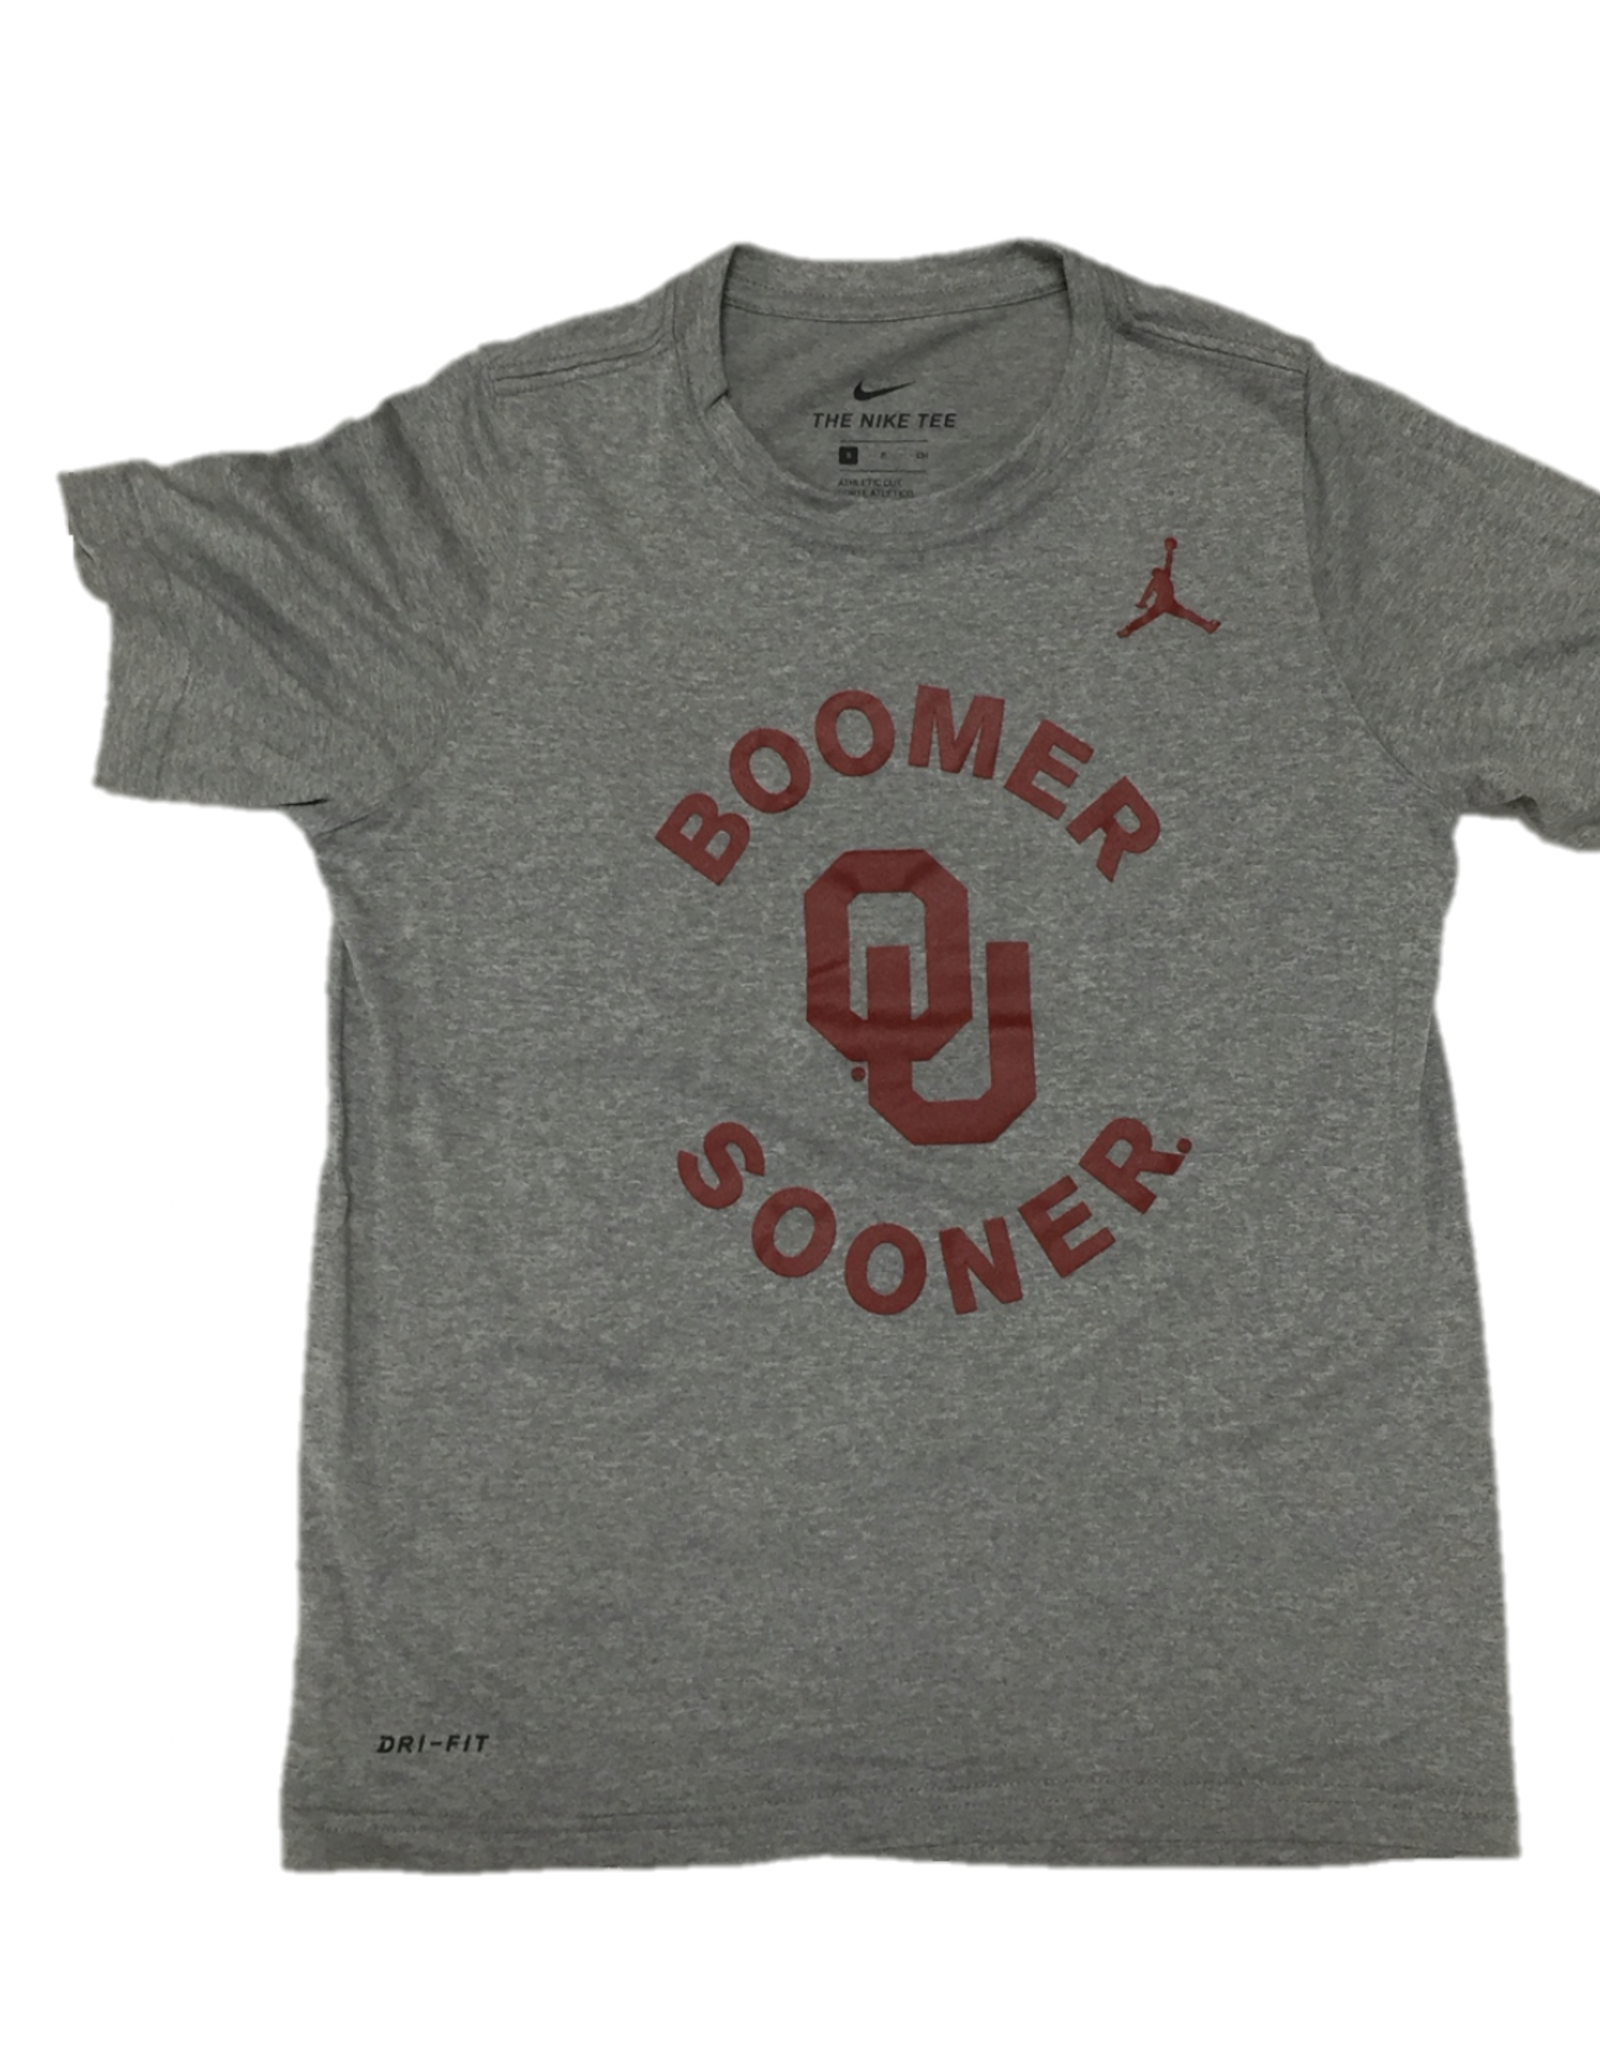 nike boomer sooner shirt